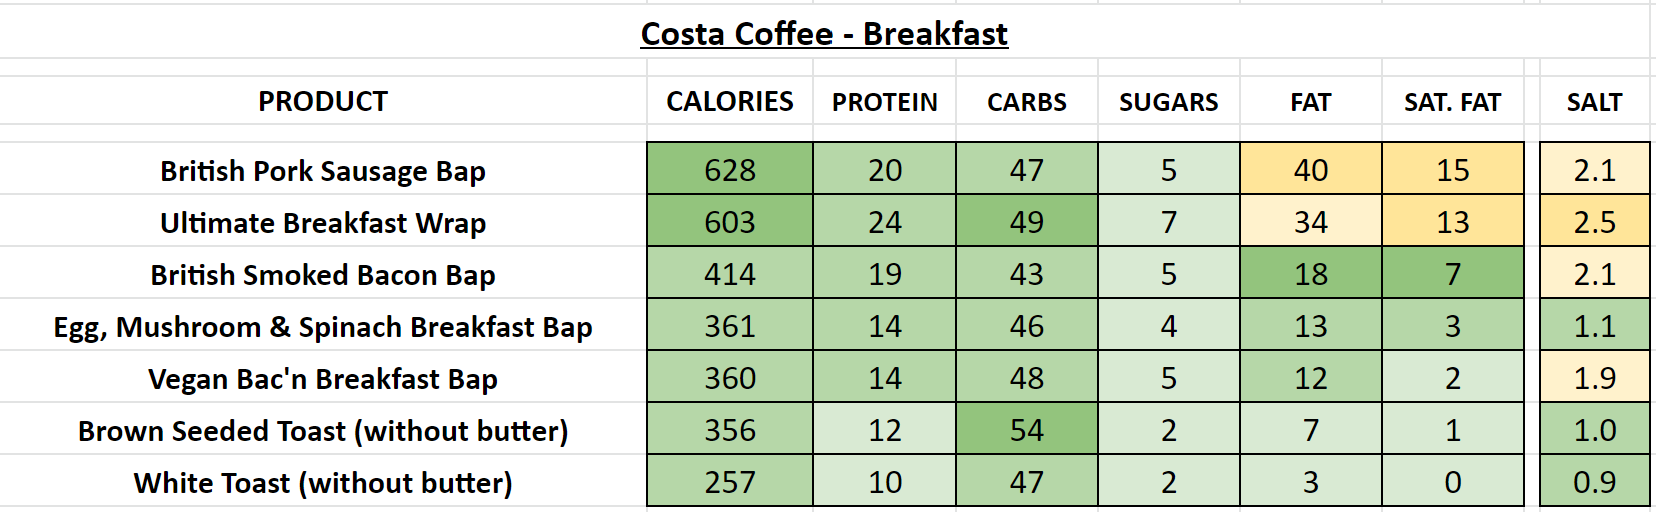 costa coffee breakfast nutritional information calories